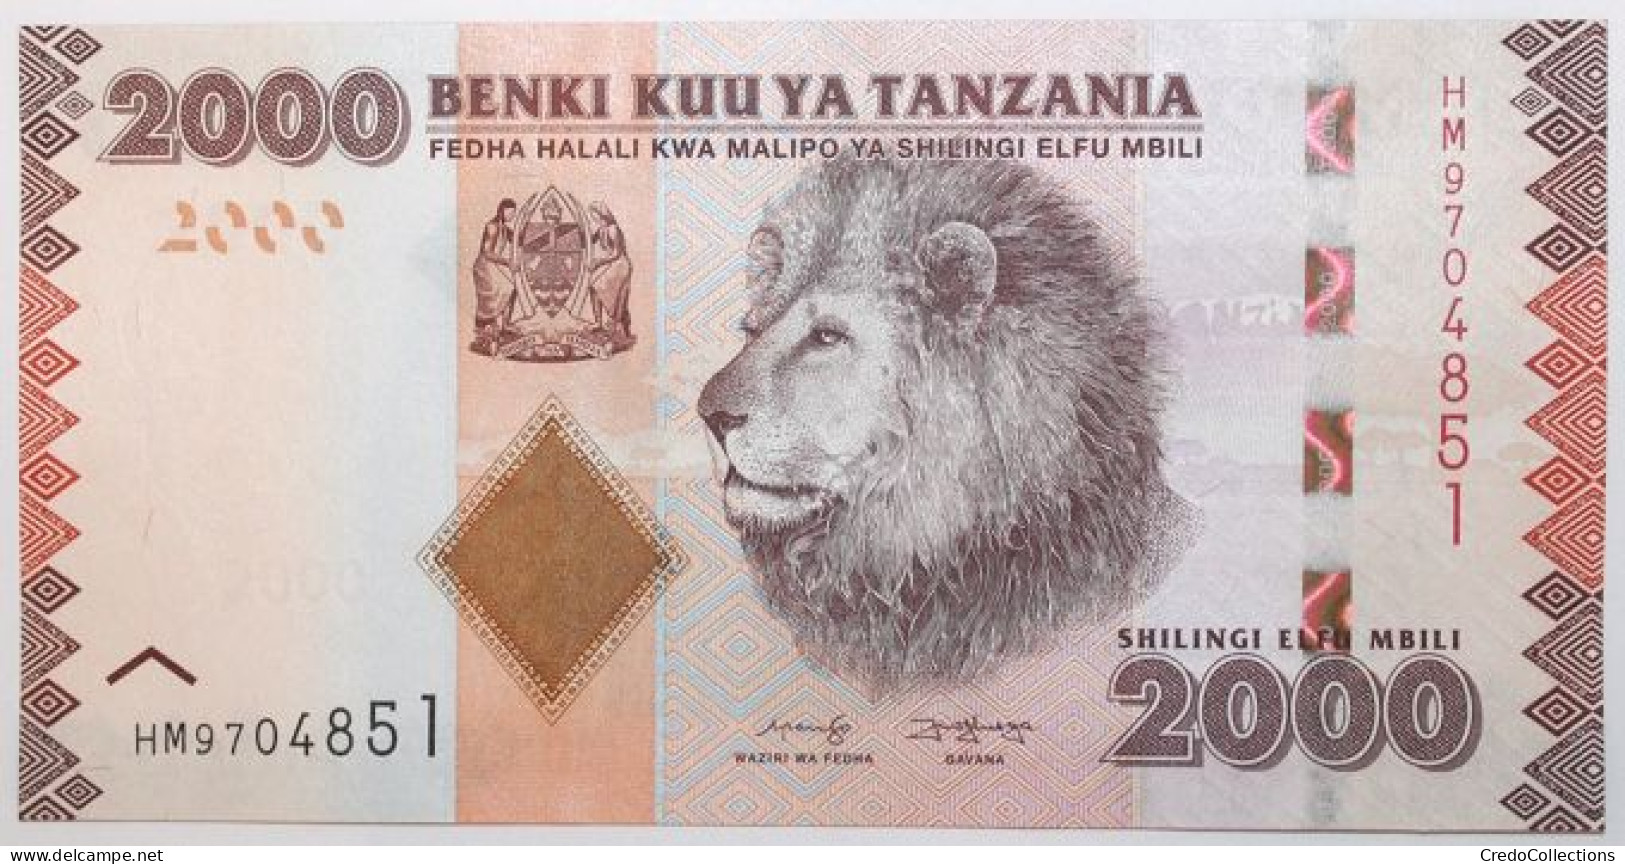 Tanzanie - 2000 Shillings - 2020 - PICK 42c - NEUF - Tanzanie